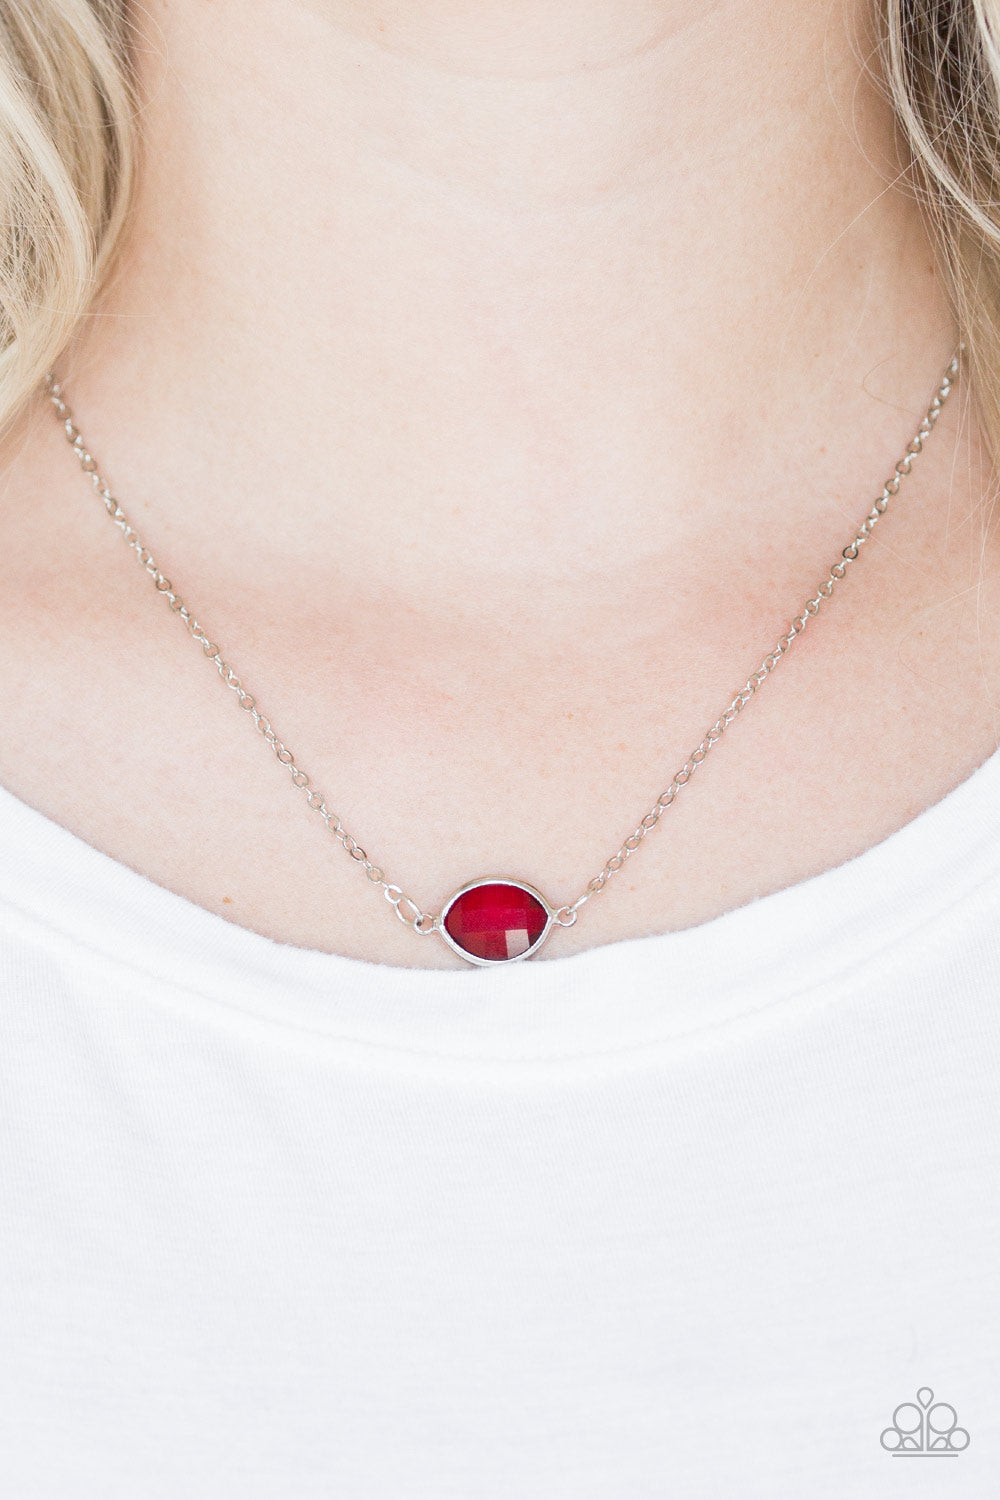 Paparazzi Necklace ~ Fashionably Fantabulous - Red Dainty Necklace